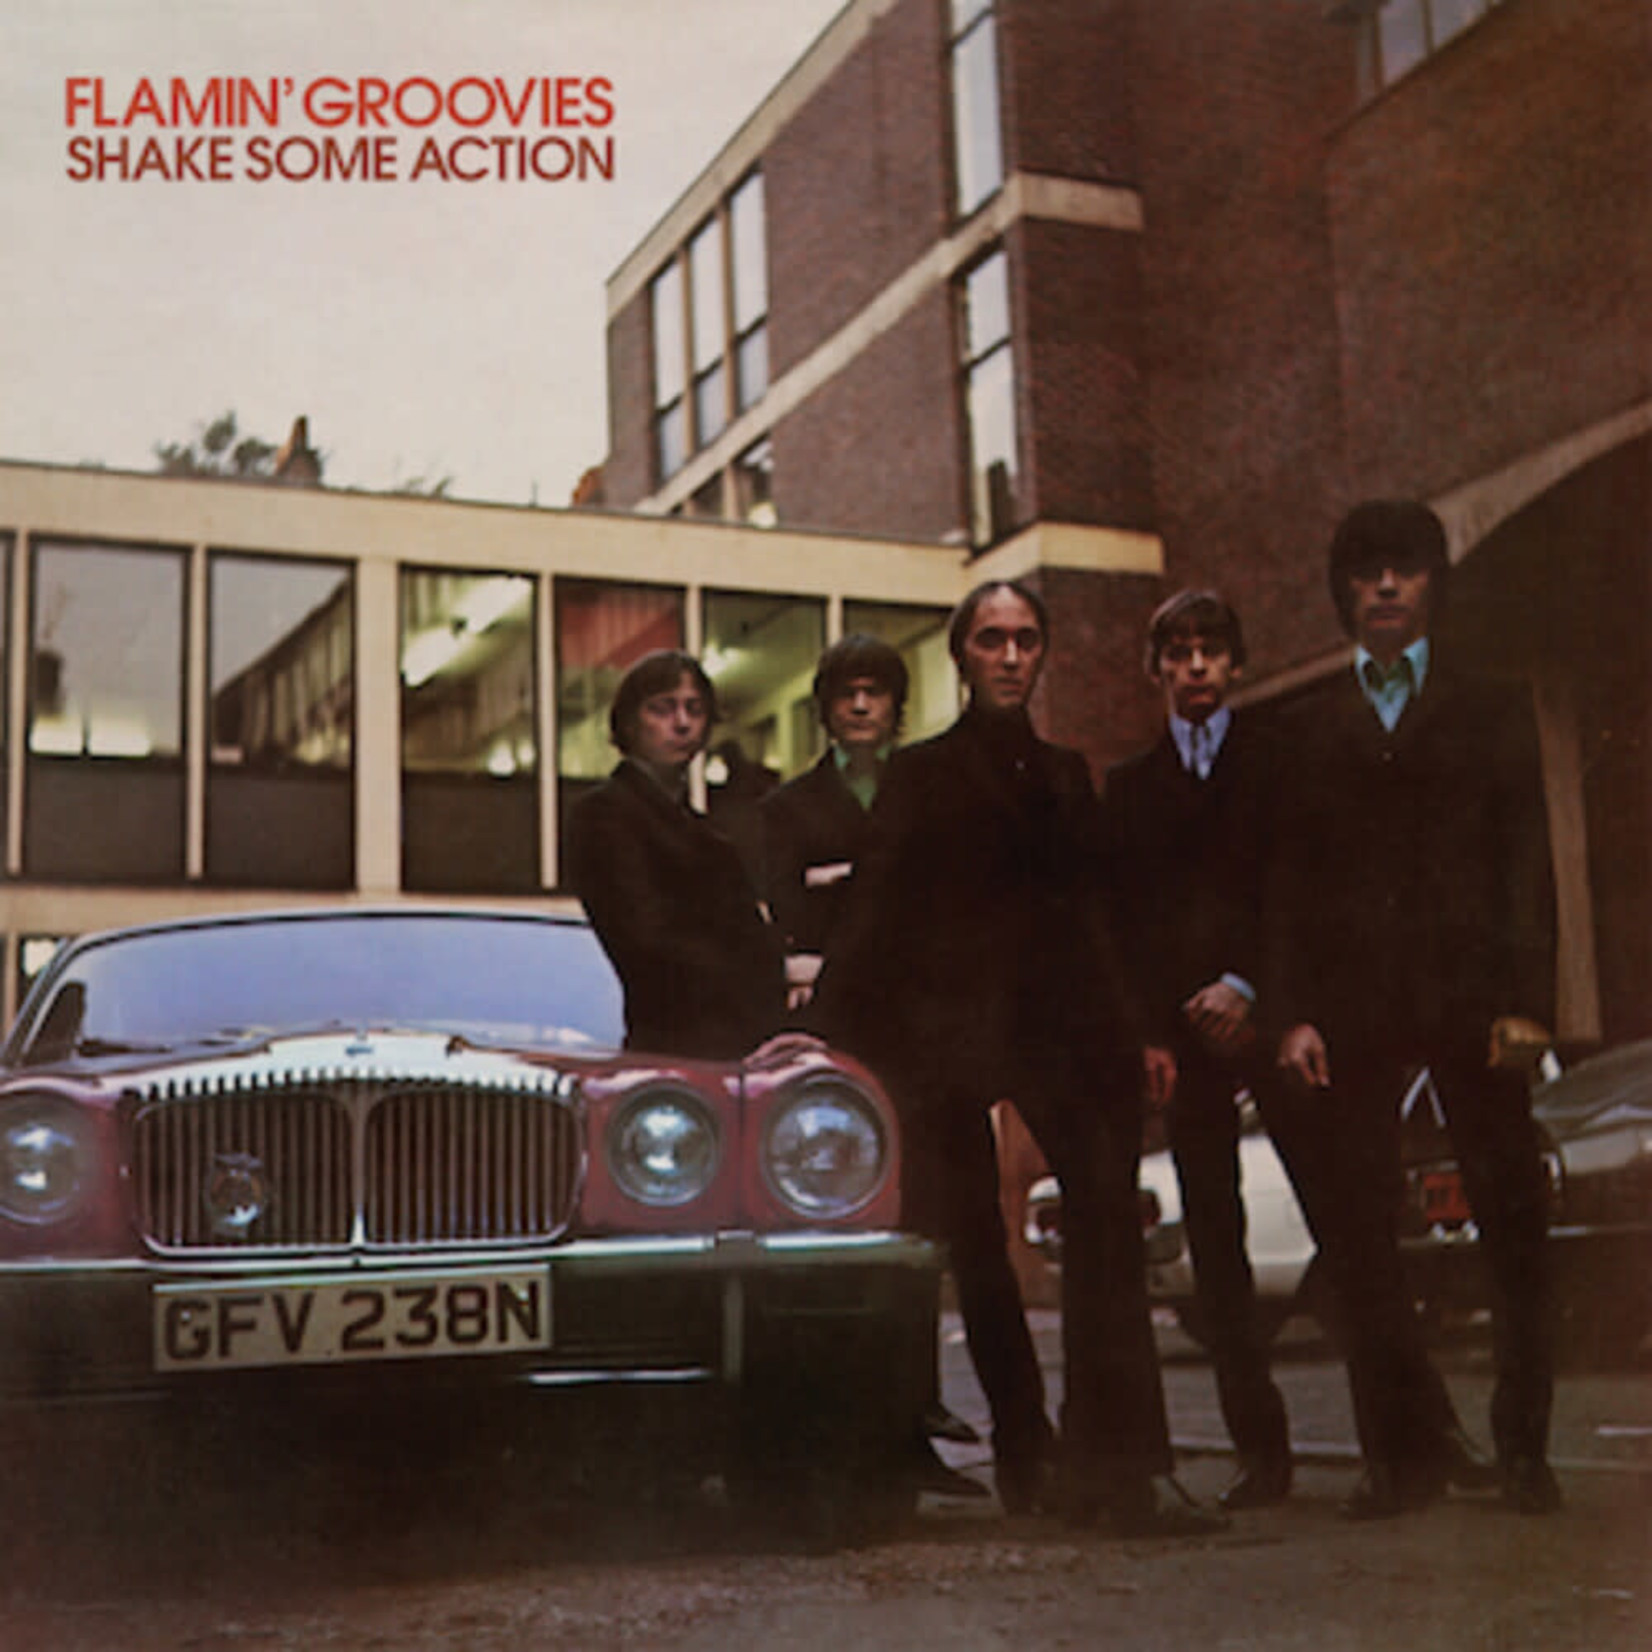 [New] FLAMIN' GROOVIES - Shake Some Action (shamrock green vinyl)